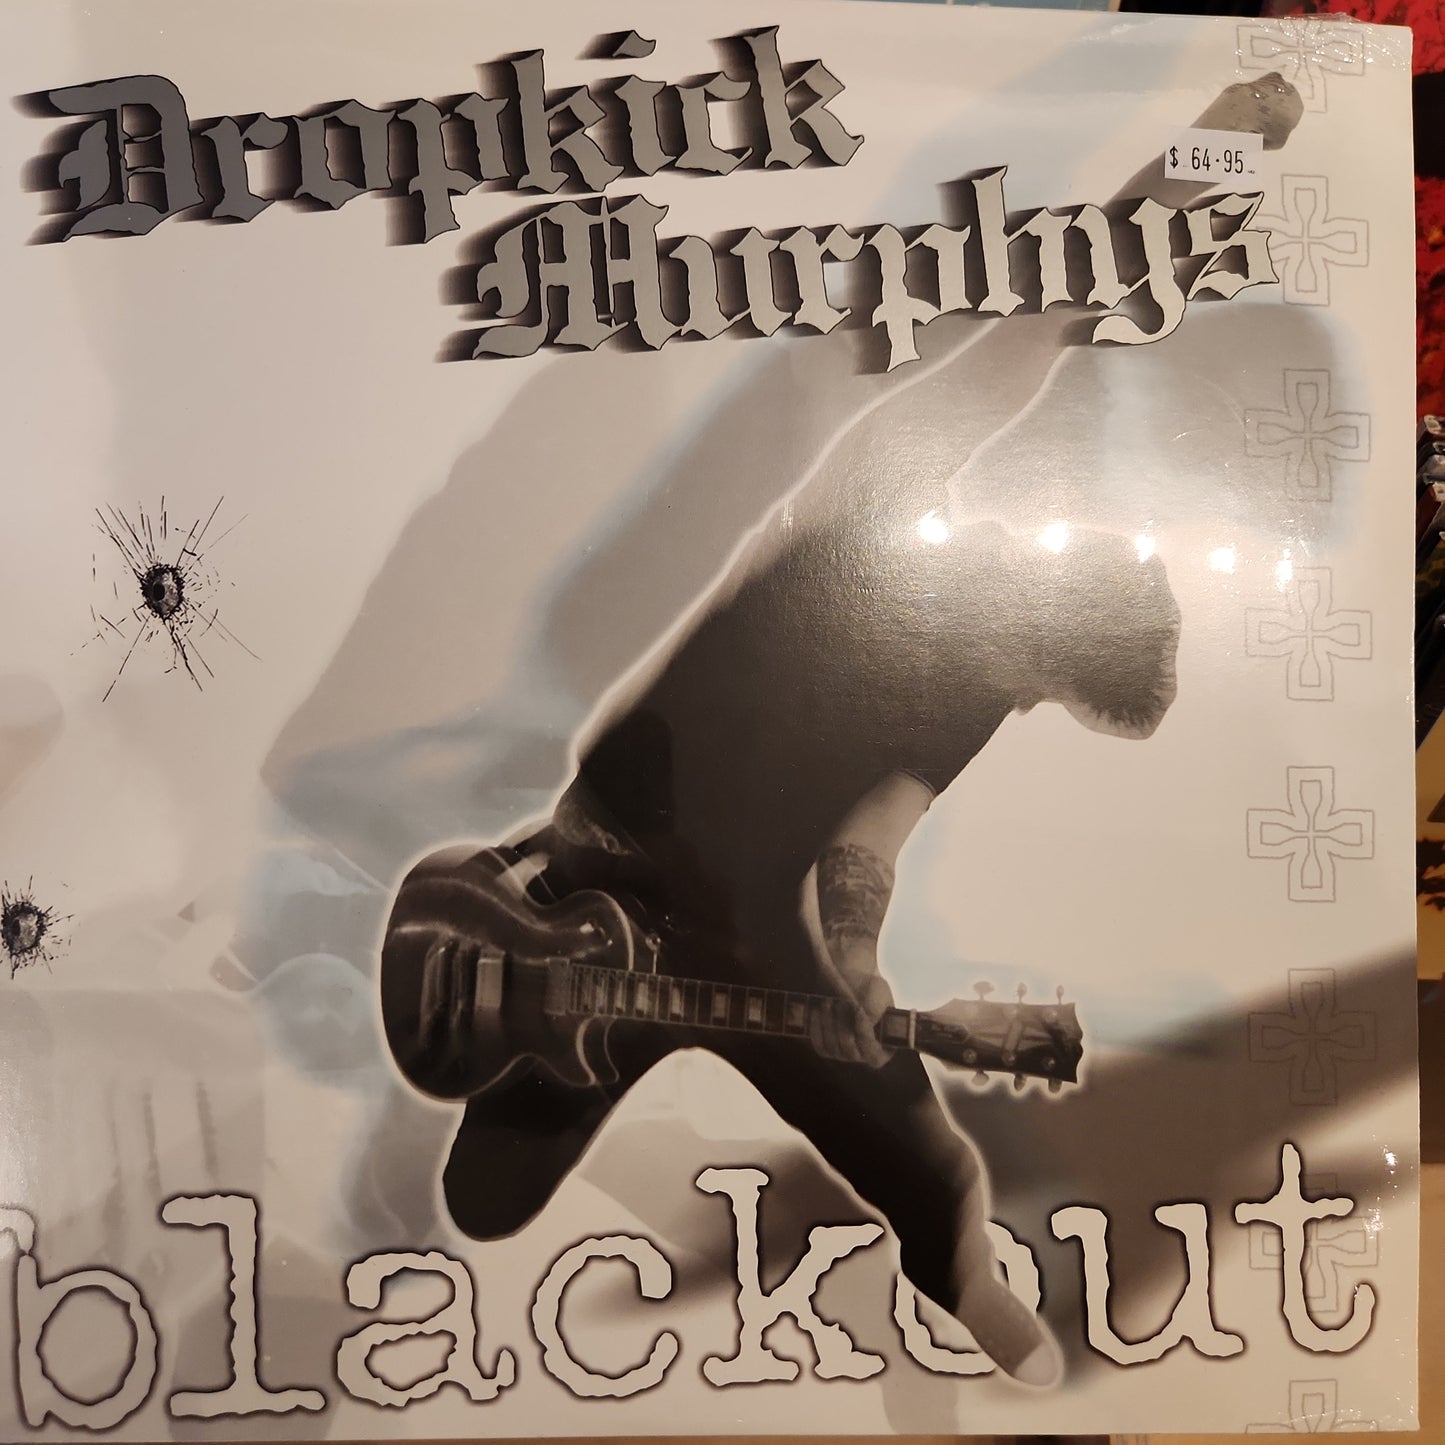 Dropkick Murphey's - Blackout - Vinyl LP